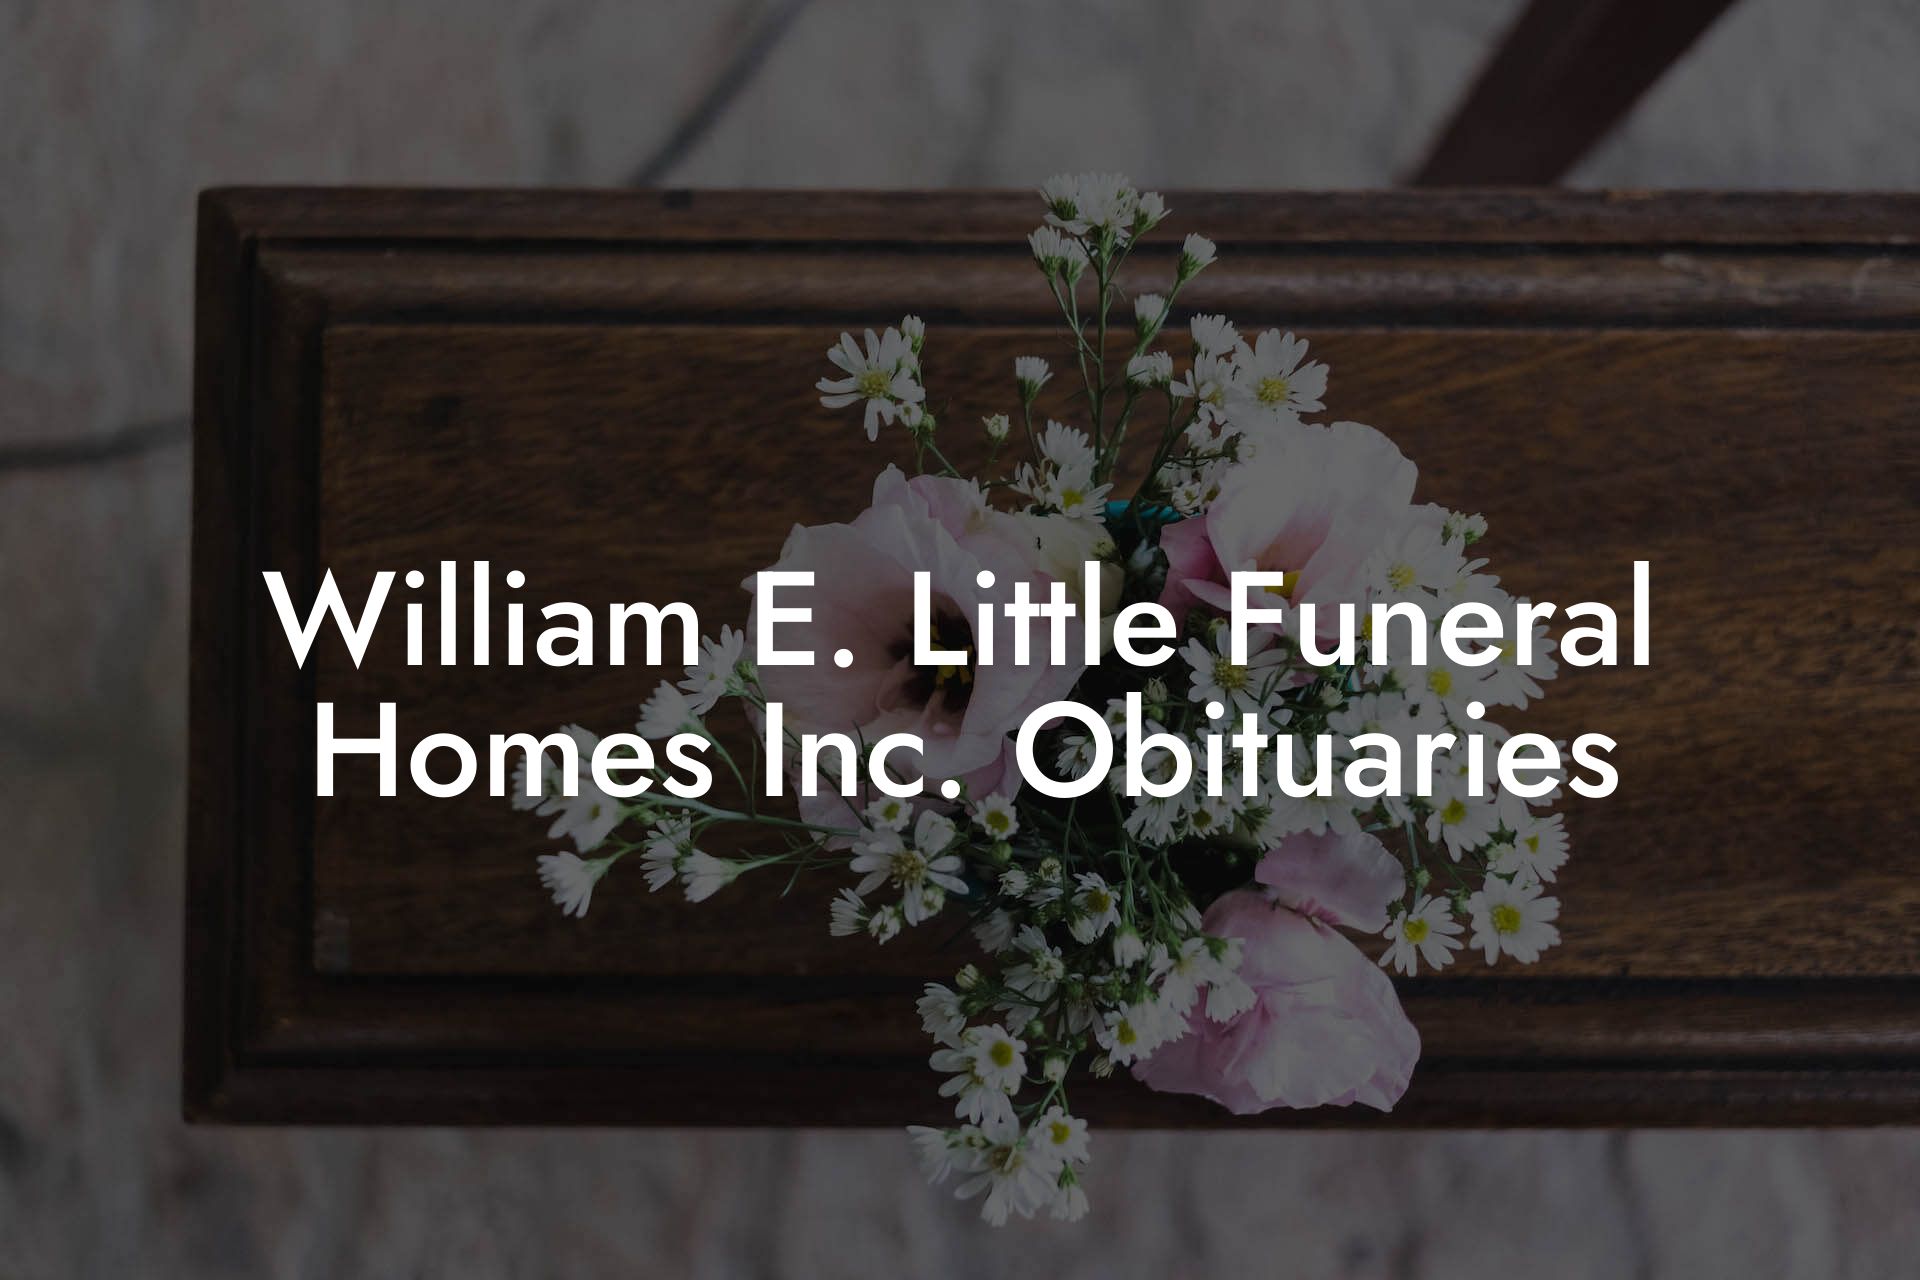 William E. Little Funeral Homes Inc. Obituaries